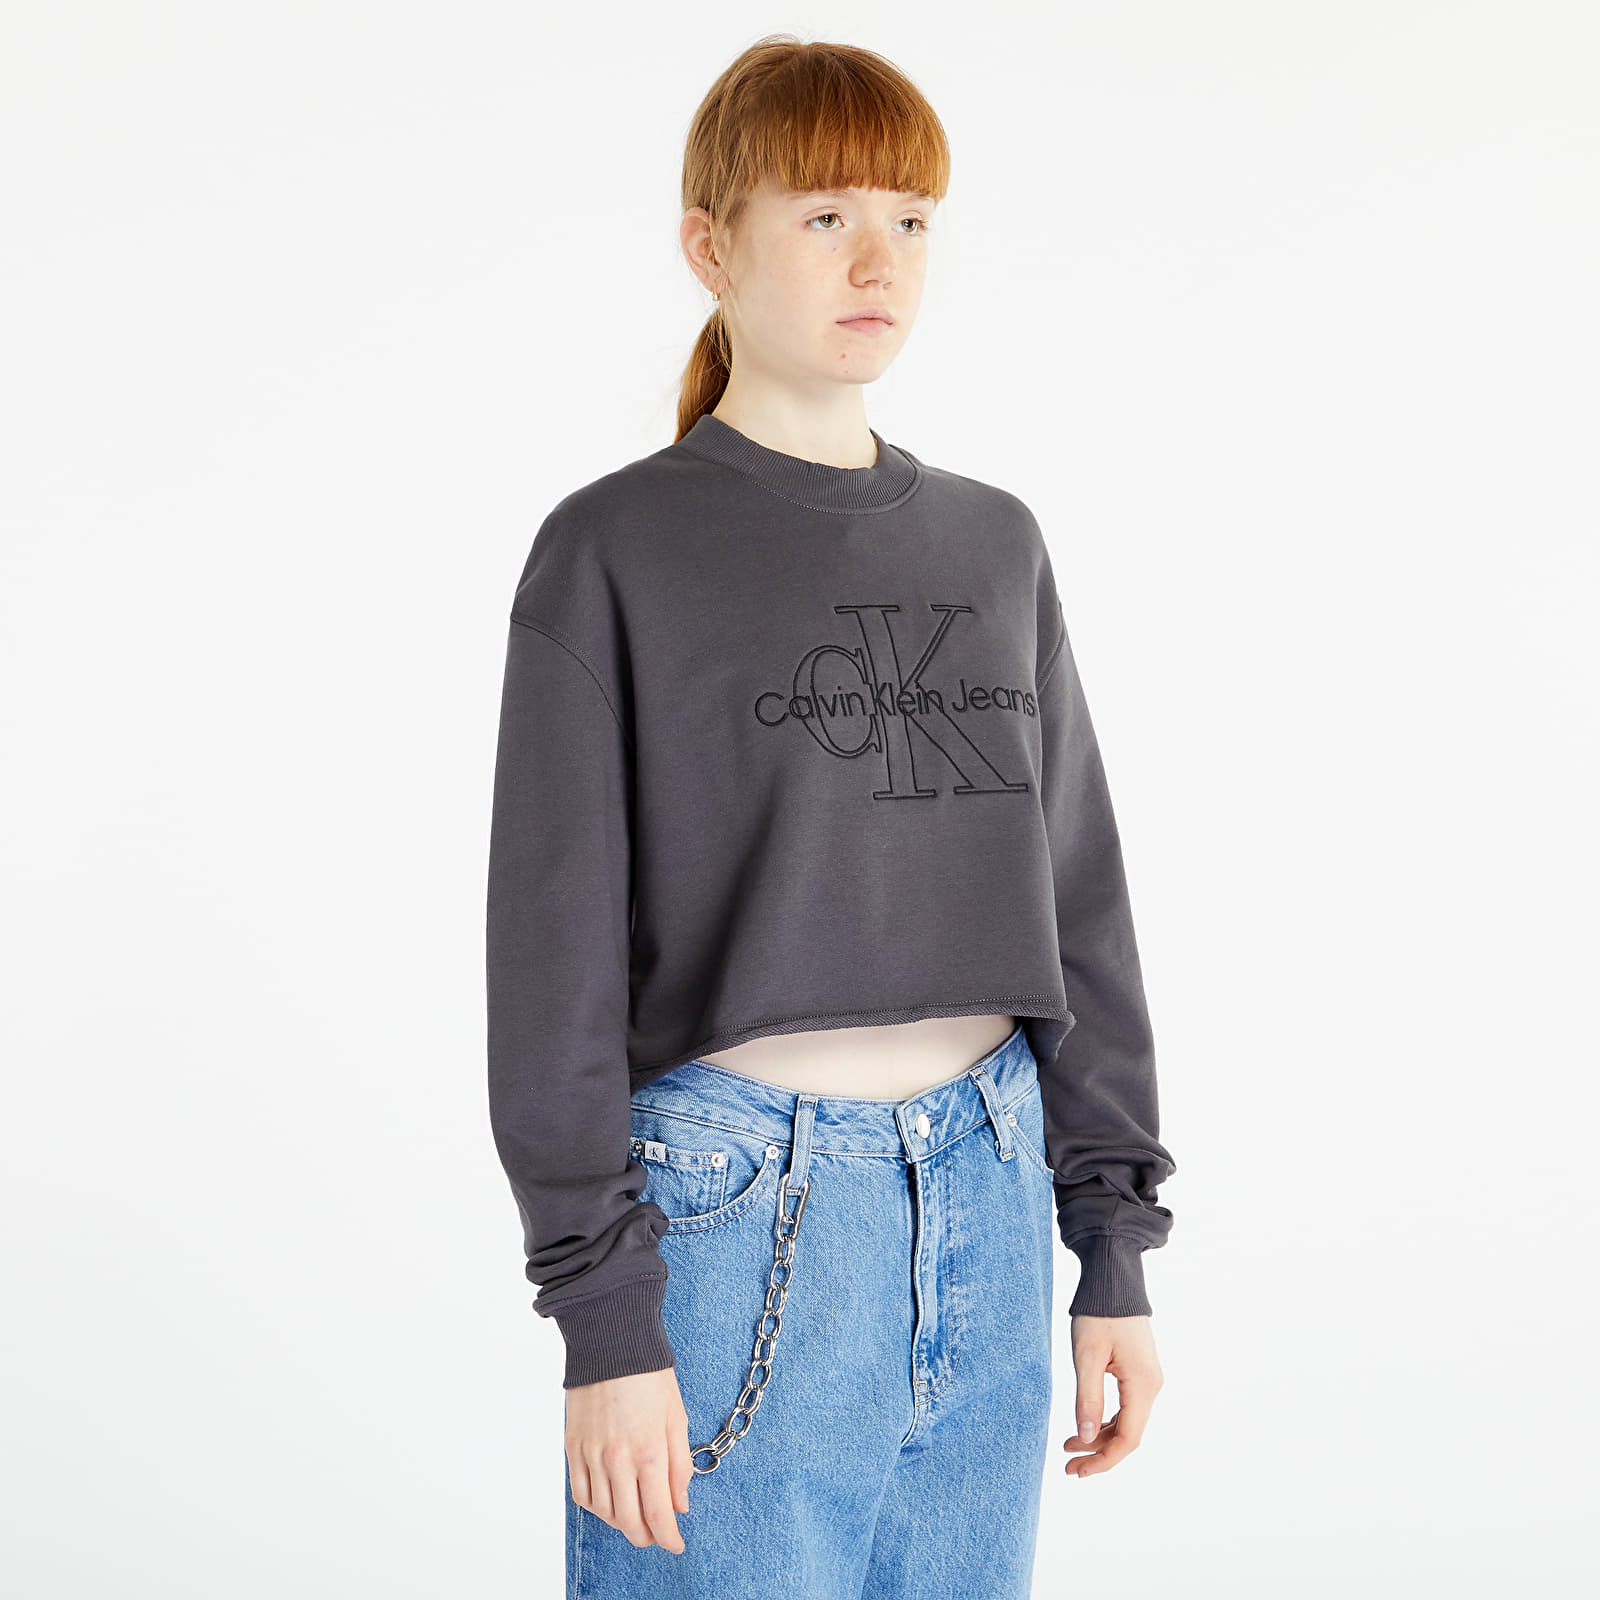 Hoodies and | Black sweatshirts Queens Washed KLEIN Embroidered Sweatshirt CALVIN Monologo JEANS